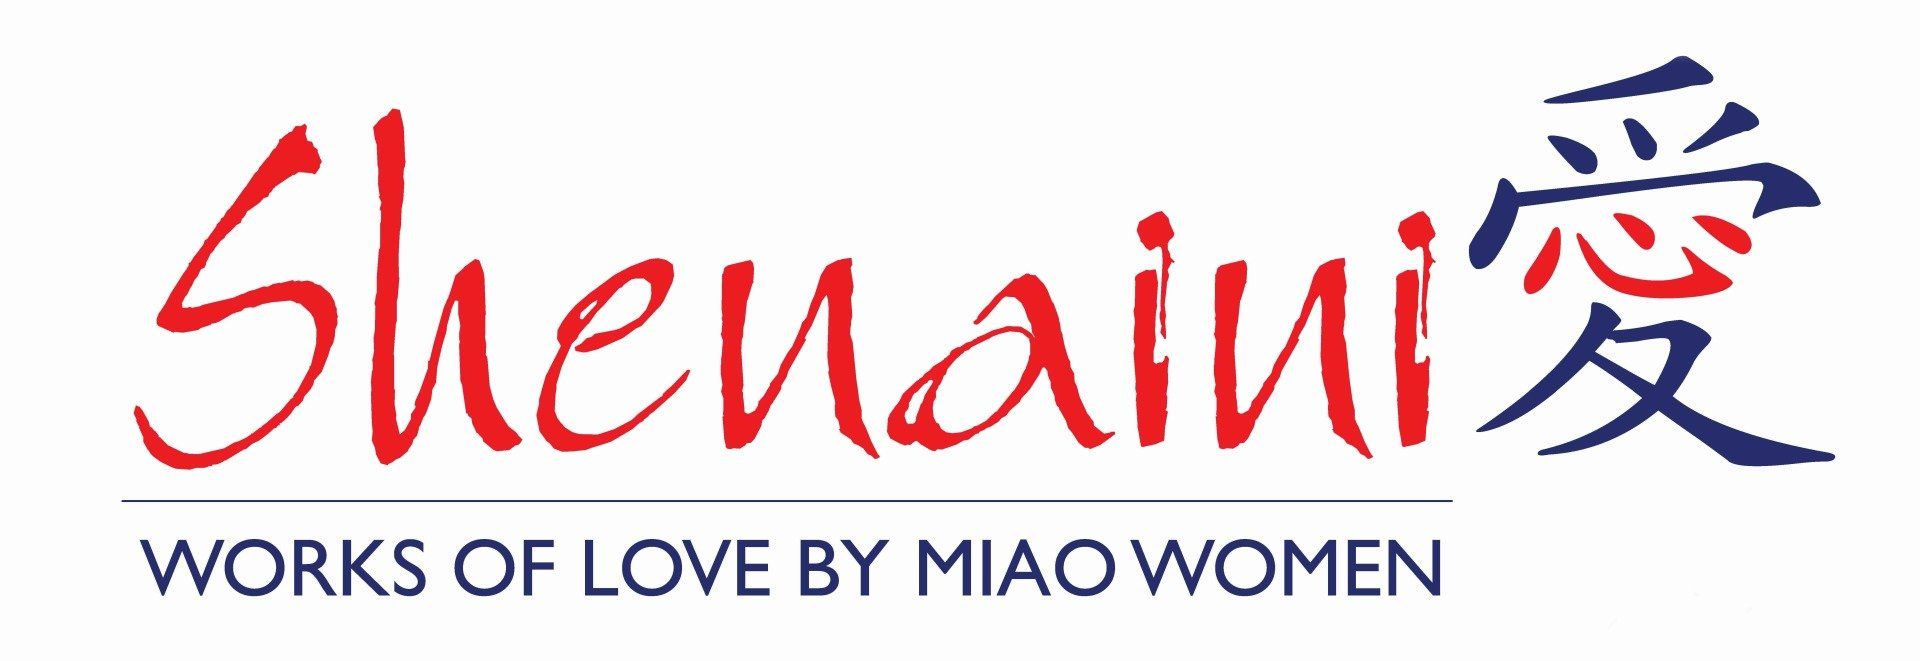 Shenaini, works of love, miao women